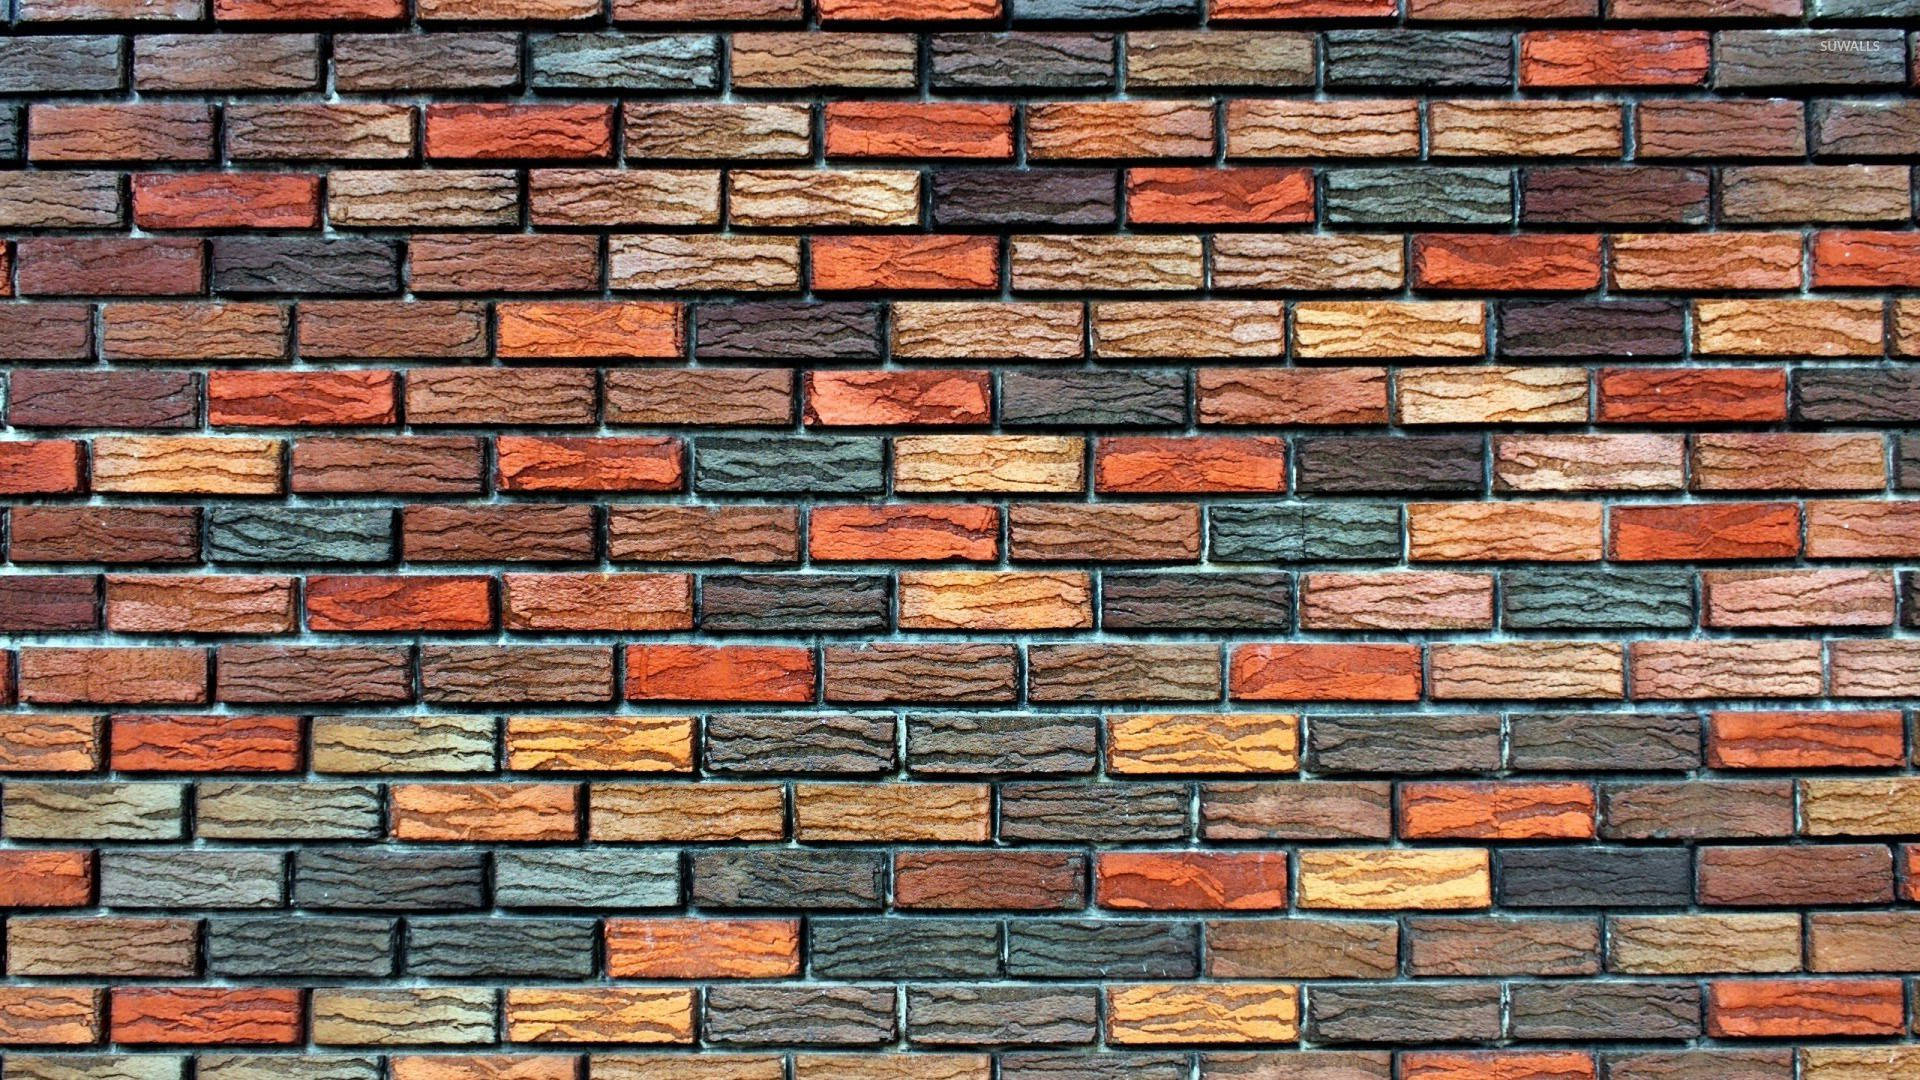 Colorful Brick Wall 0bofx90xp655vs85 